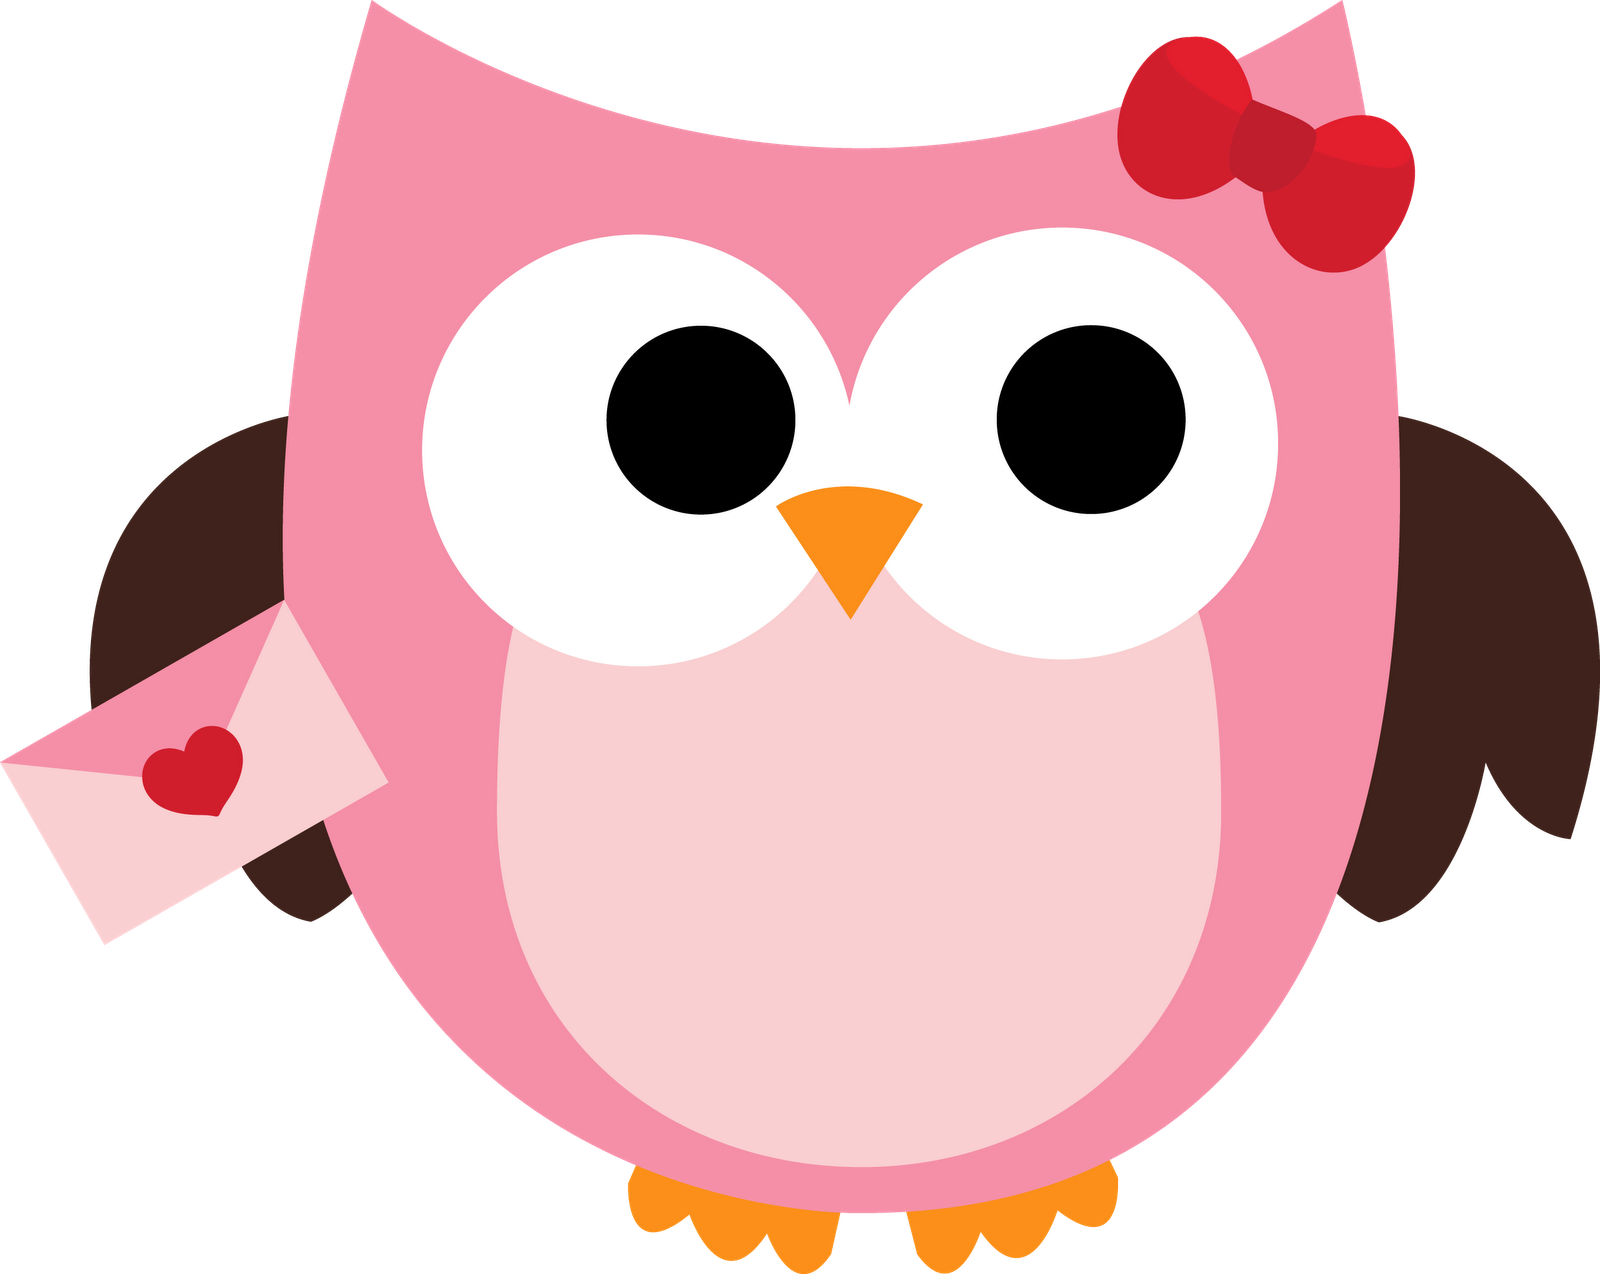 Girly Pink Purple Owls Digita